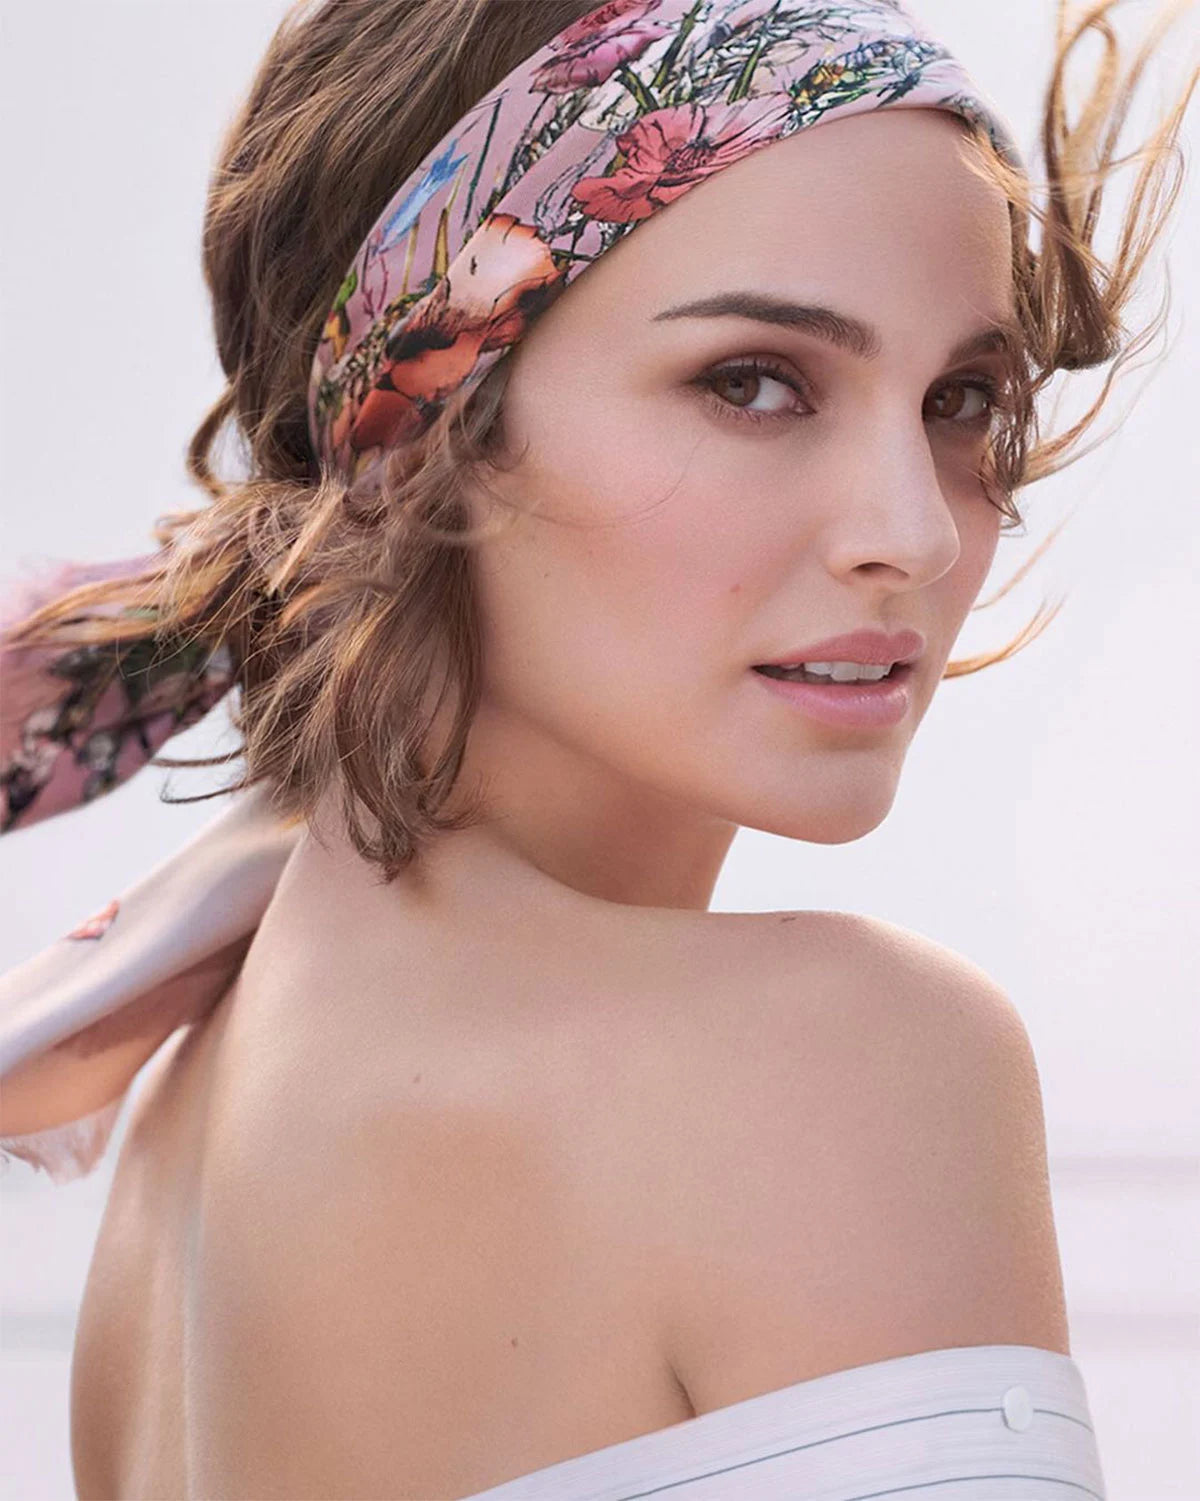 Natalie Portman wearing Secret lashes for new Miss Dior fragrance Campaign